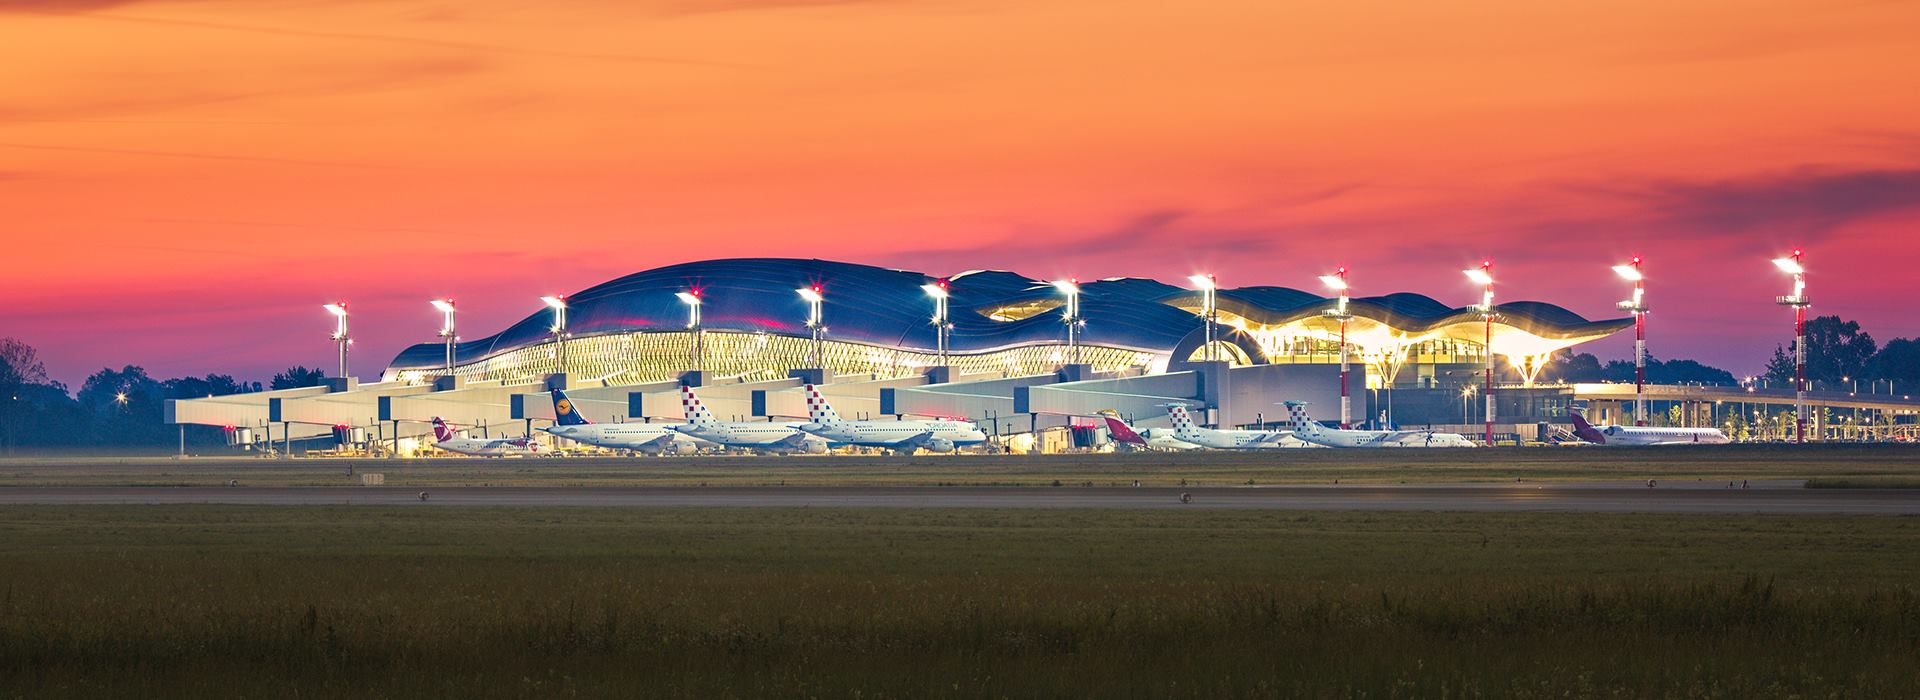 Zračna luka Franjo Tuđman rekordna po broju putnika u ljetnom redu letenja 2017. godine